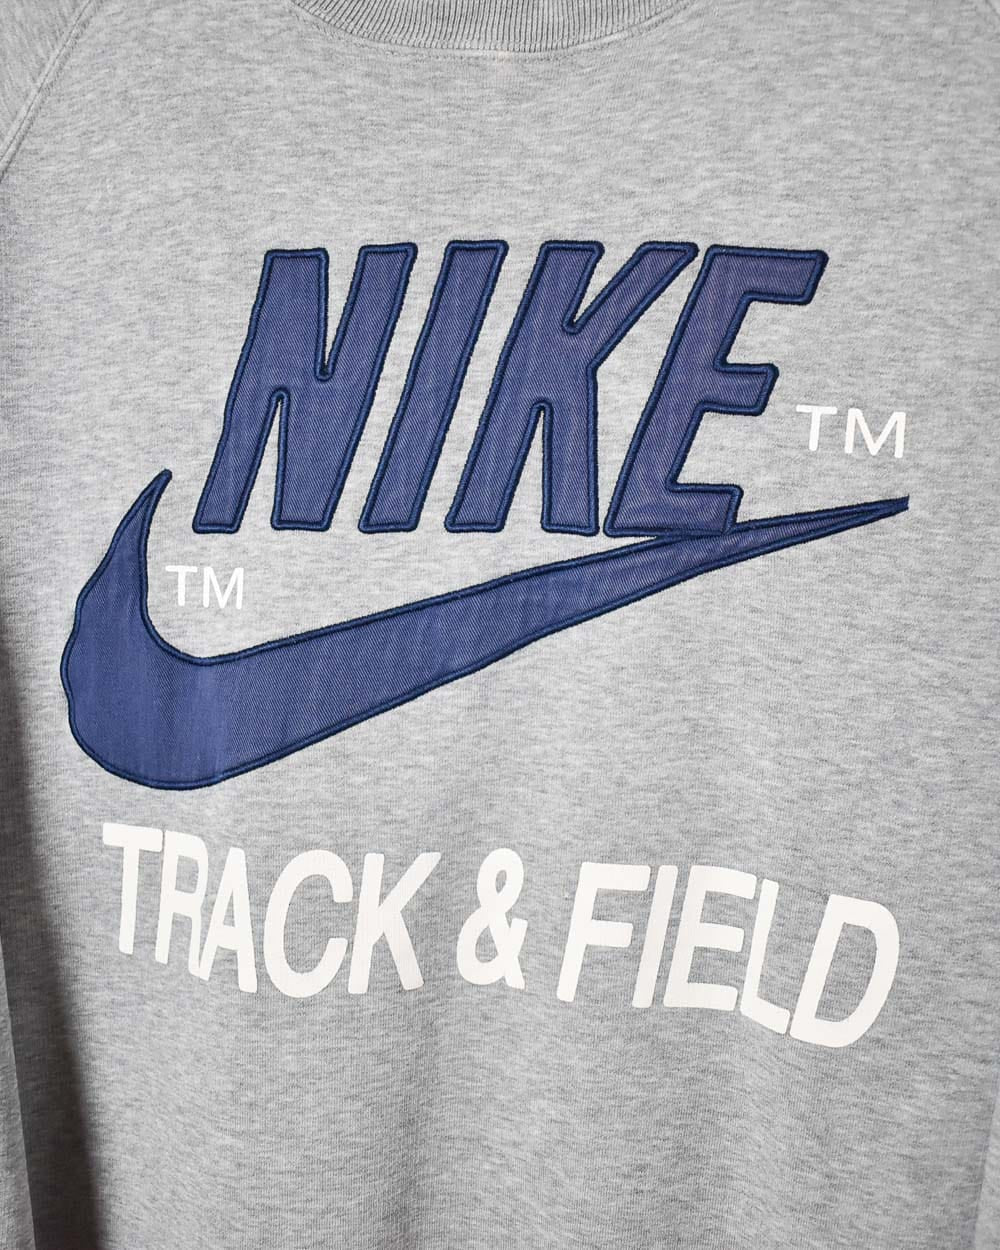 Stone Nike Track & Field Sweatshirt - Small